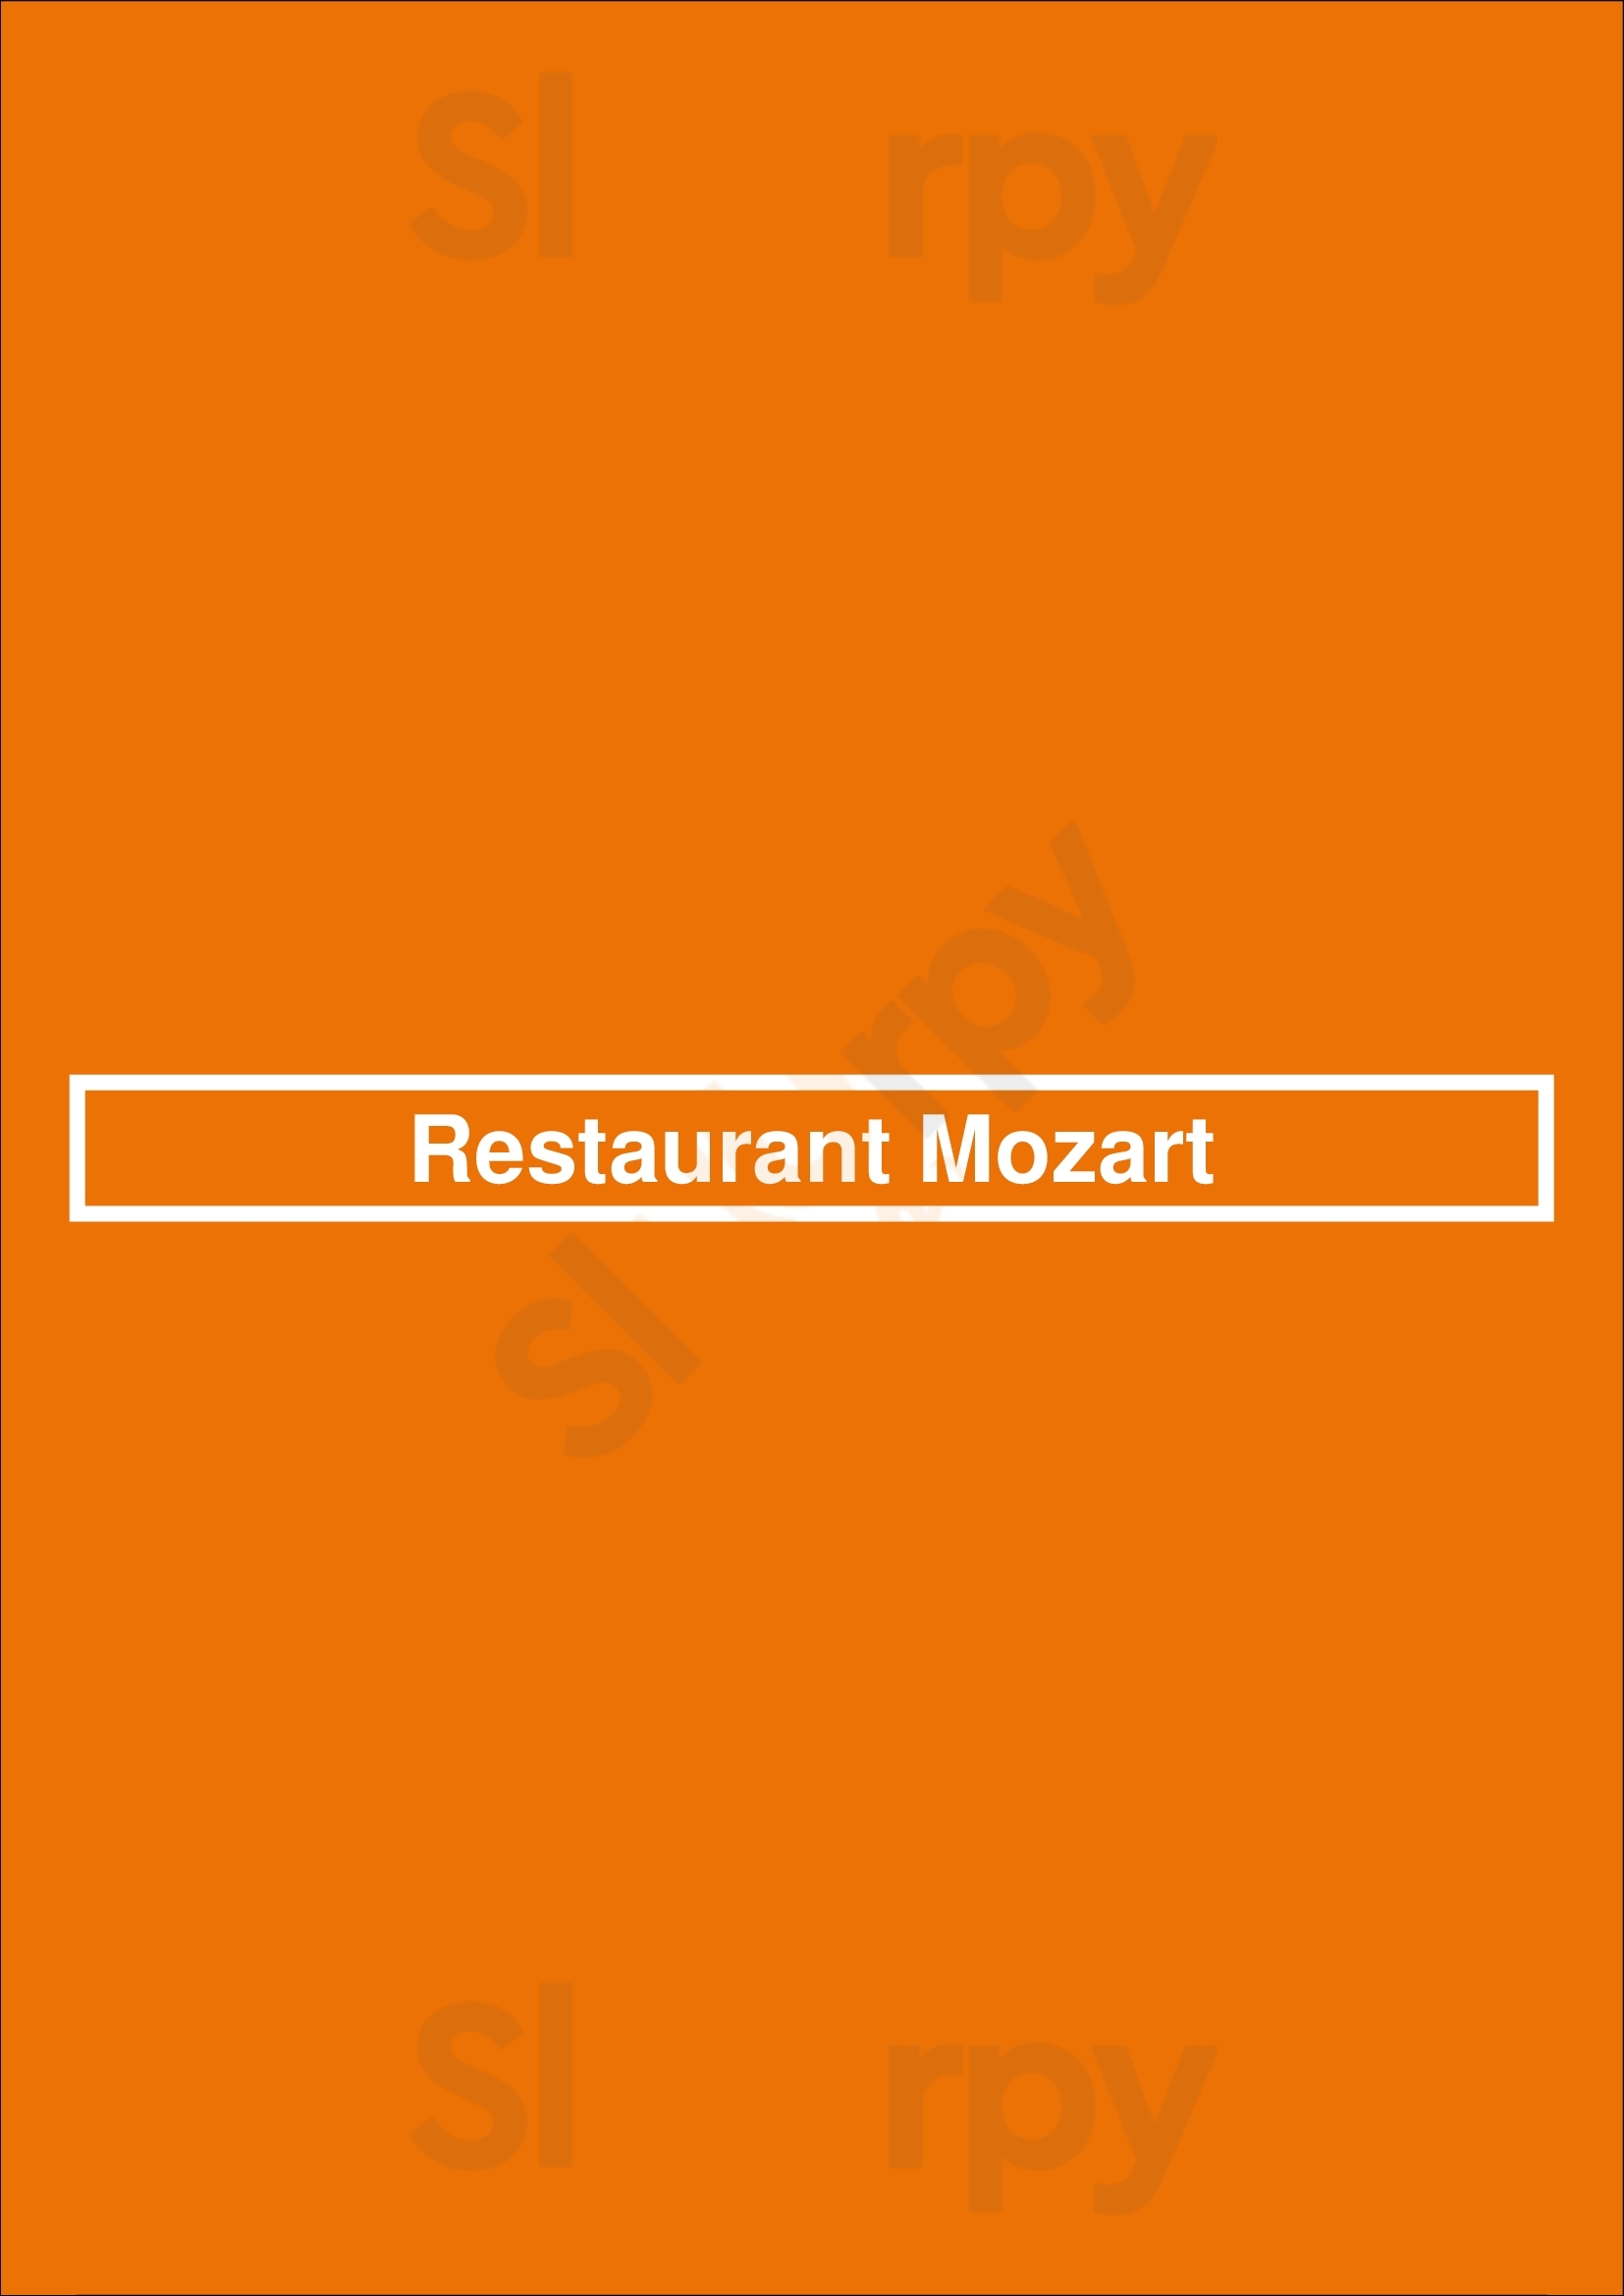 Restaurant Mozart Funchal Menu - 1